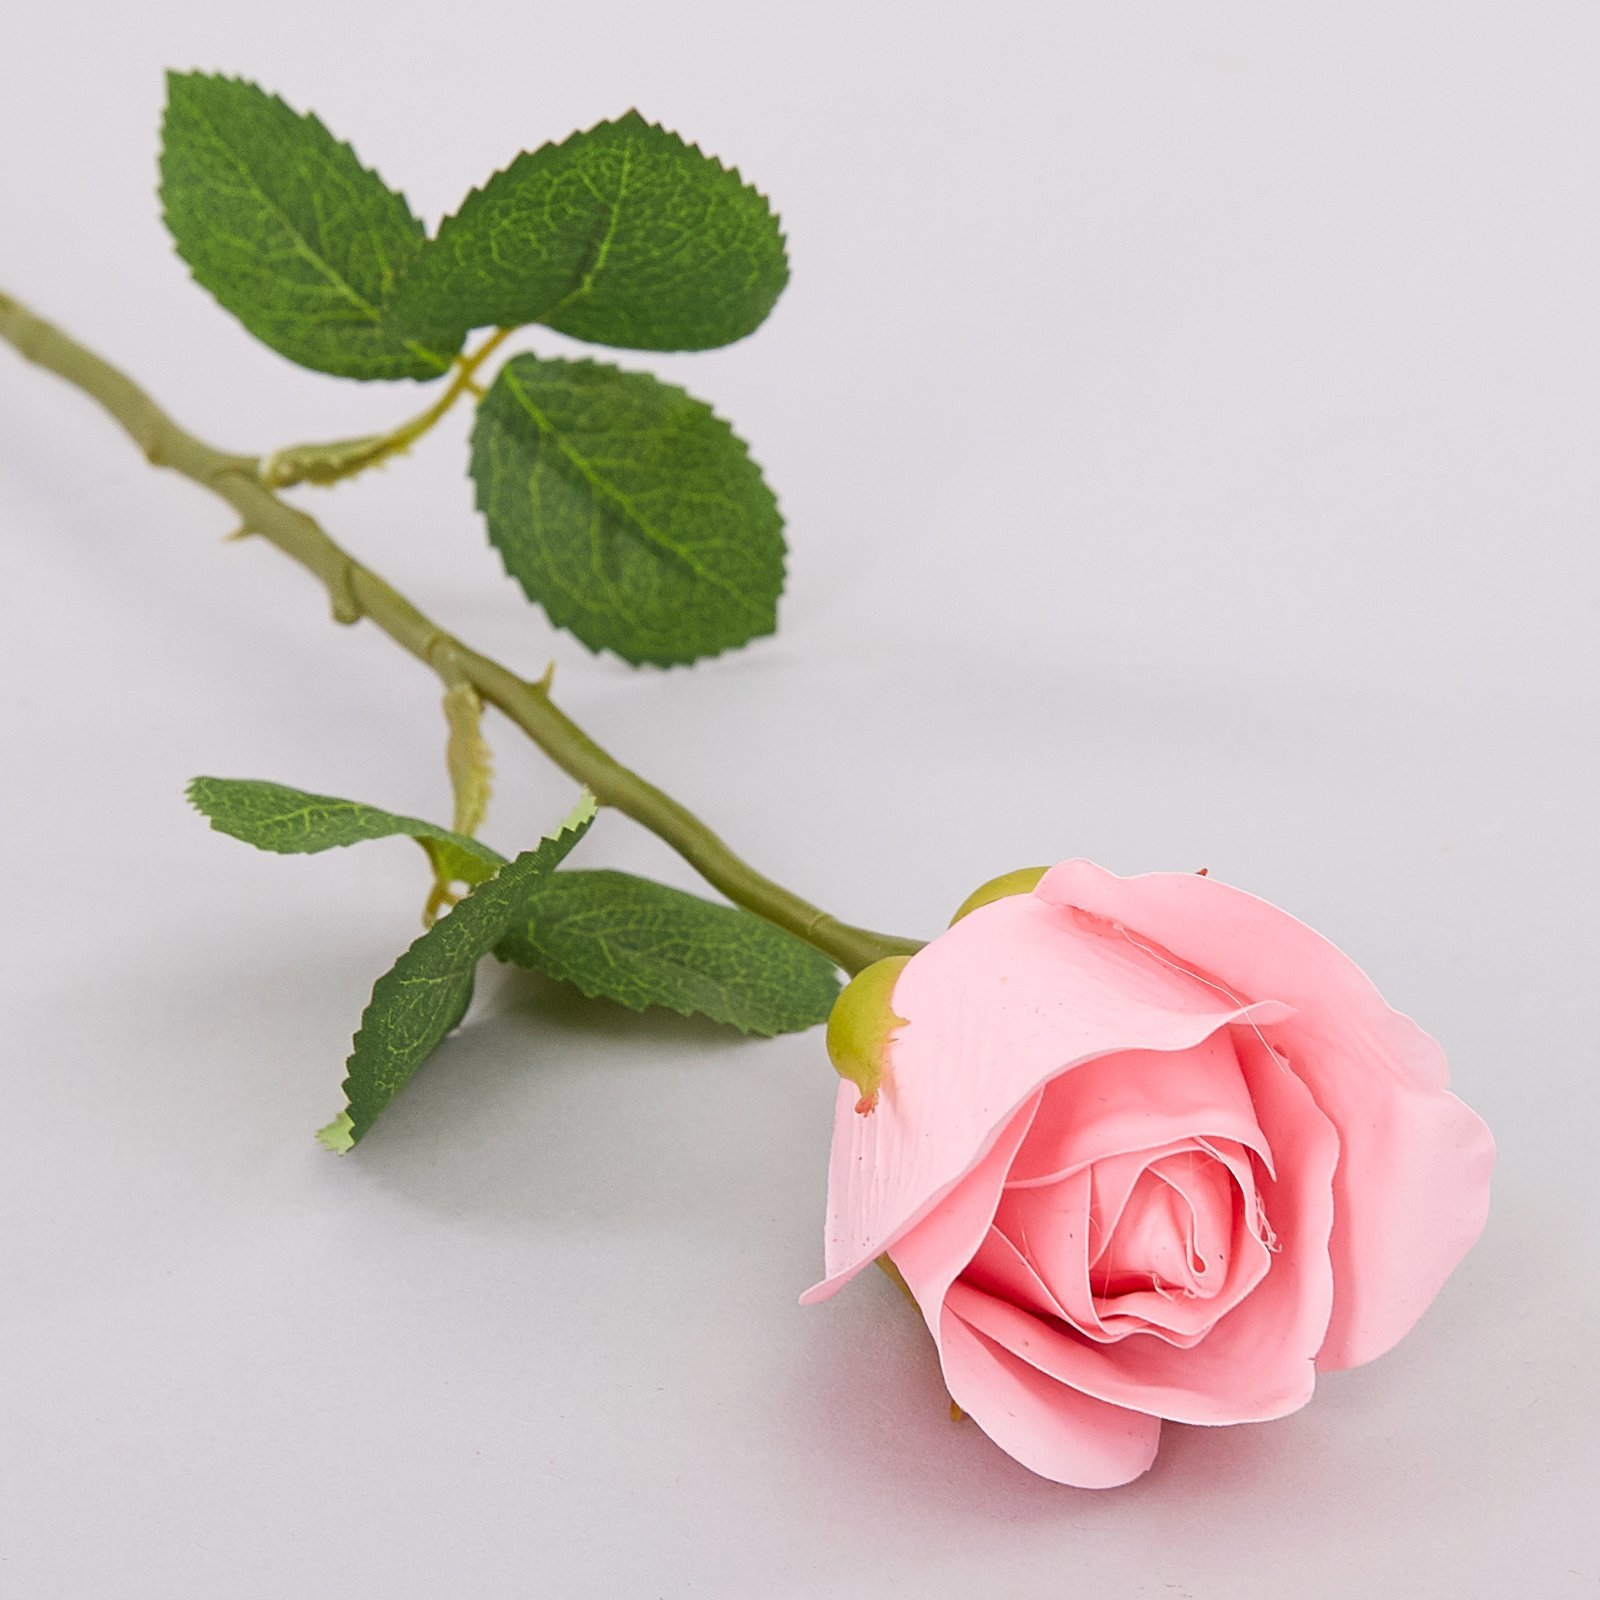 Одна розовая роза